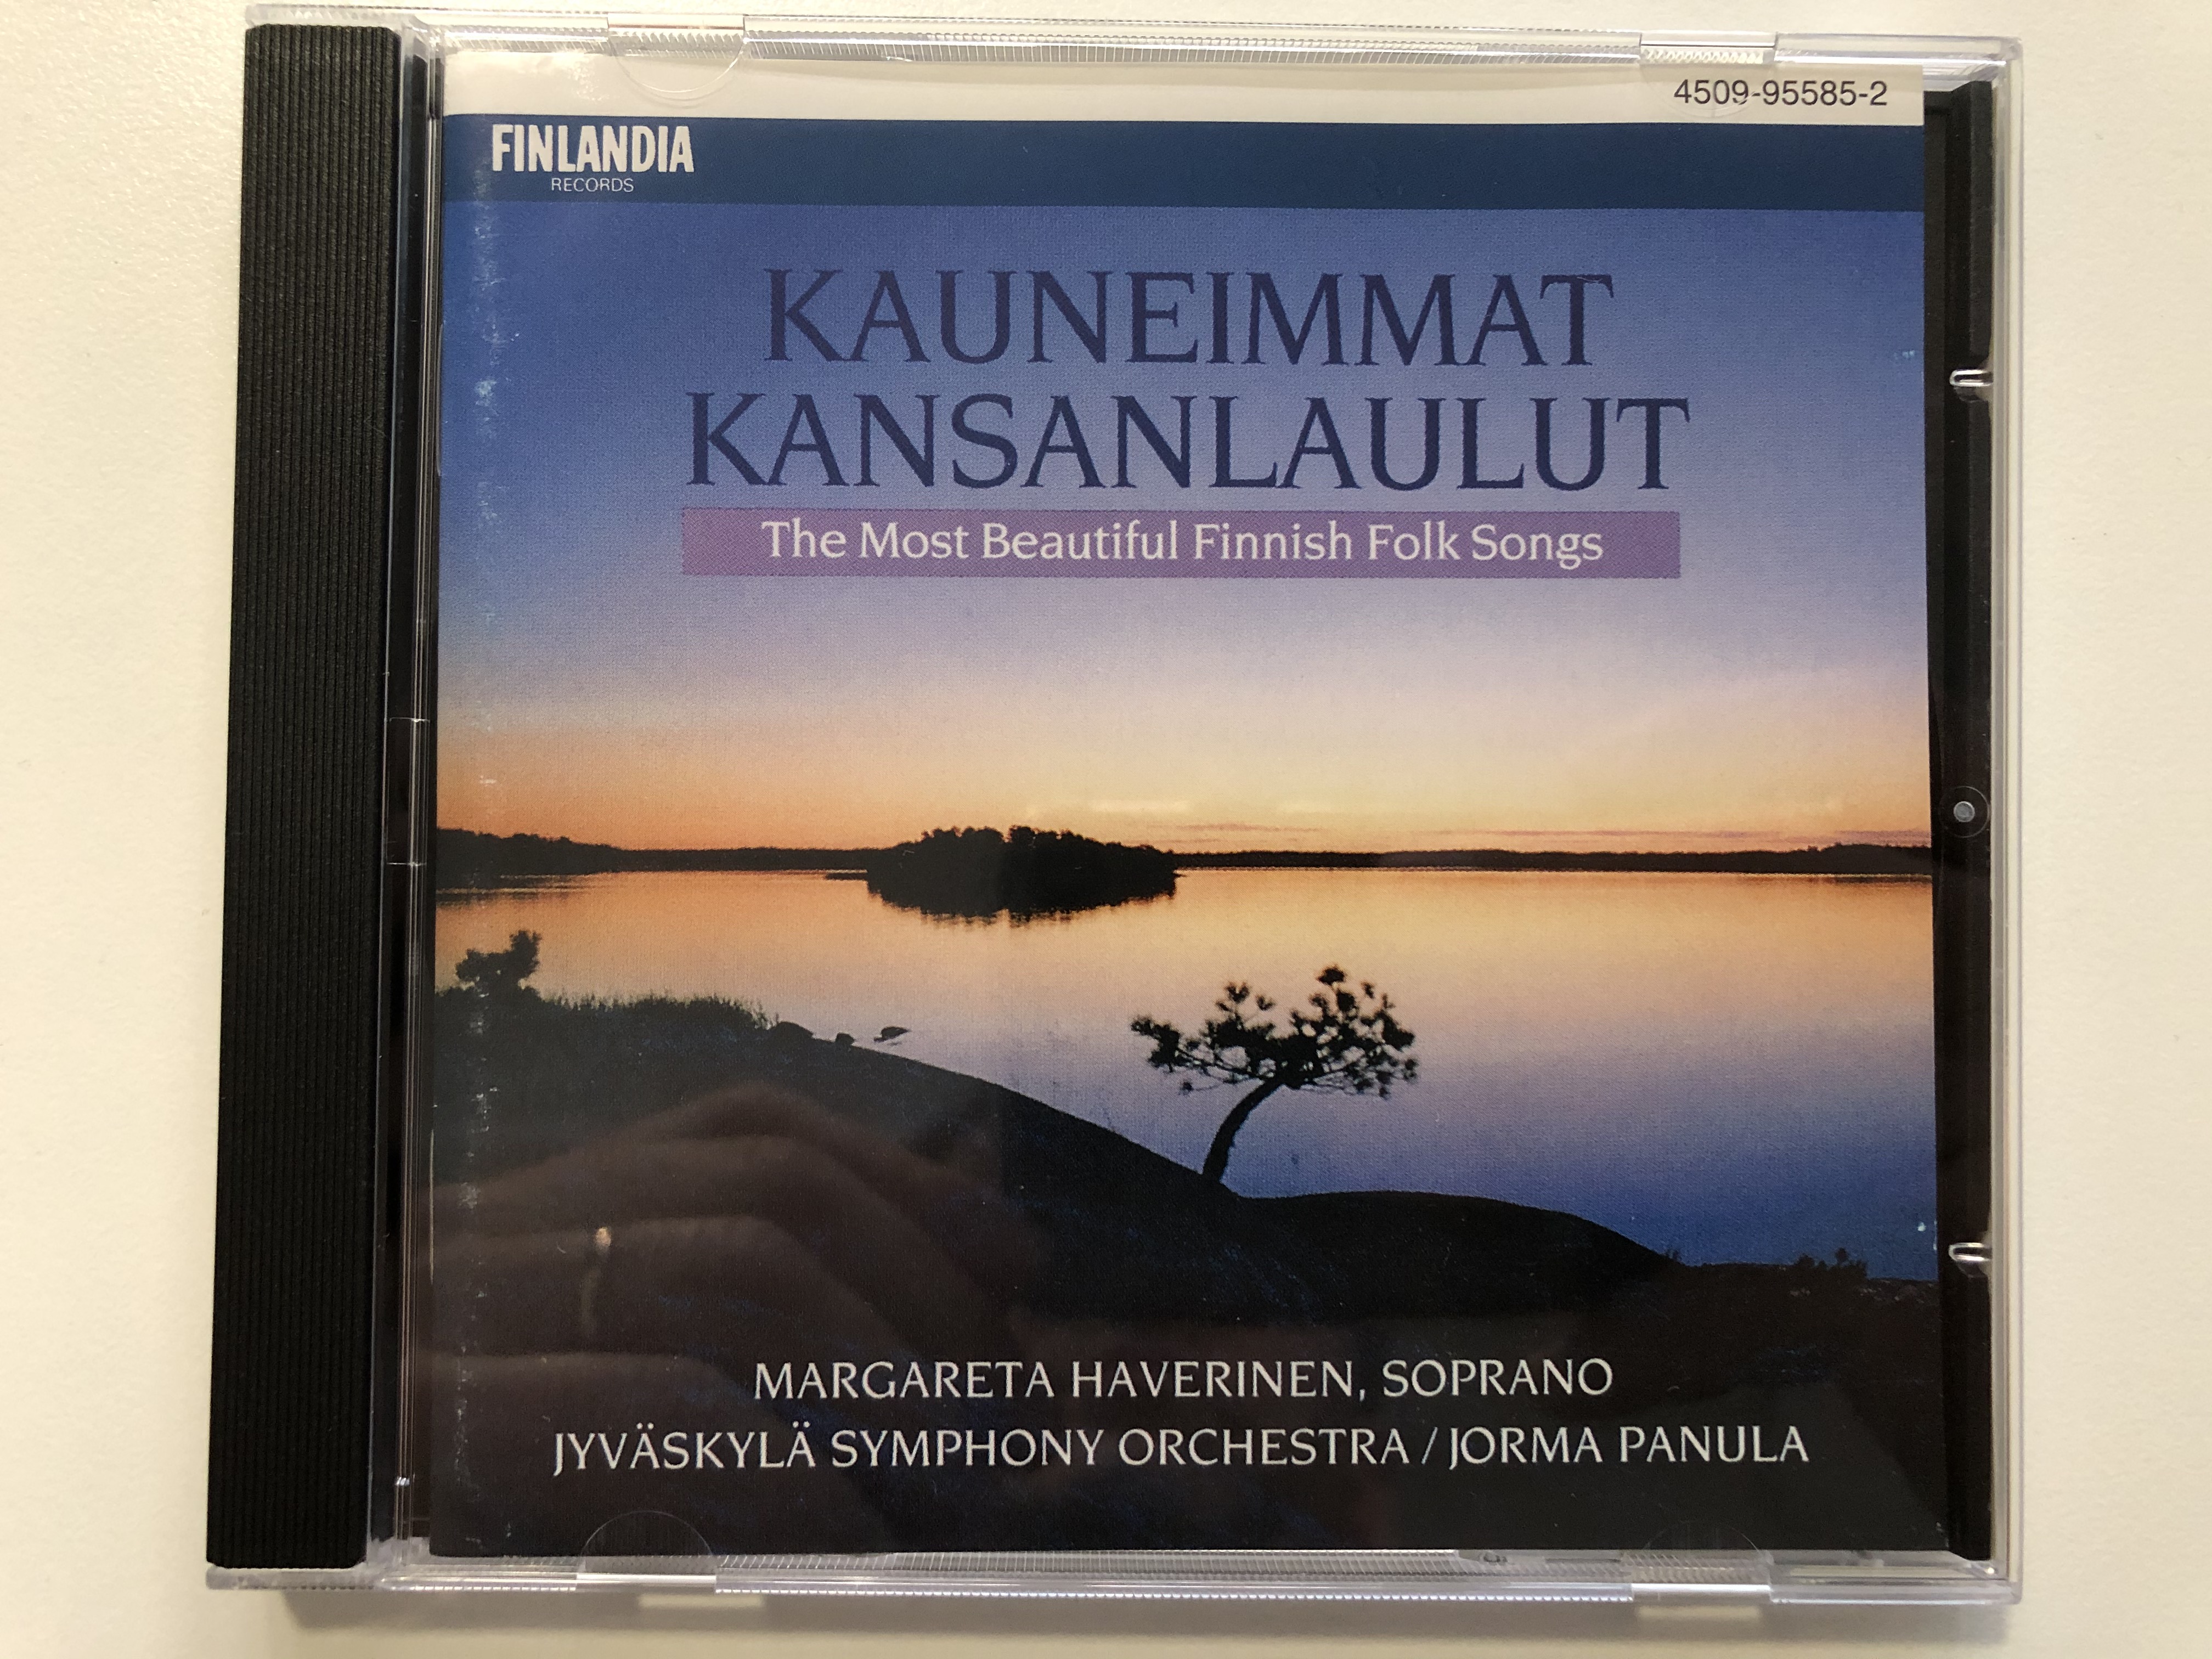 kauneimmat-kansanlaulut-the-most-beautiful-finnish-folk-songs-margareta-haverinen-soprano-jyv-skyl-symphony-orchestra-jorma-panula-finlandia-records-audio-cd-1994-stereo-4509-95585-1-.jpg